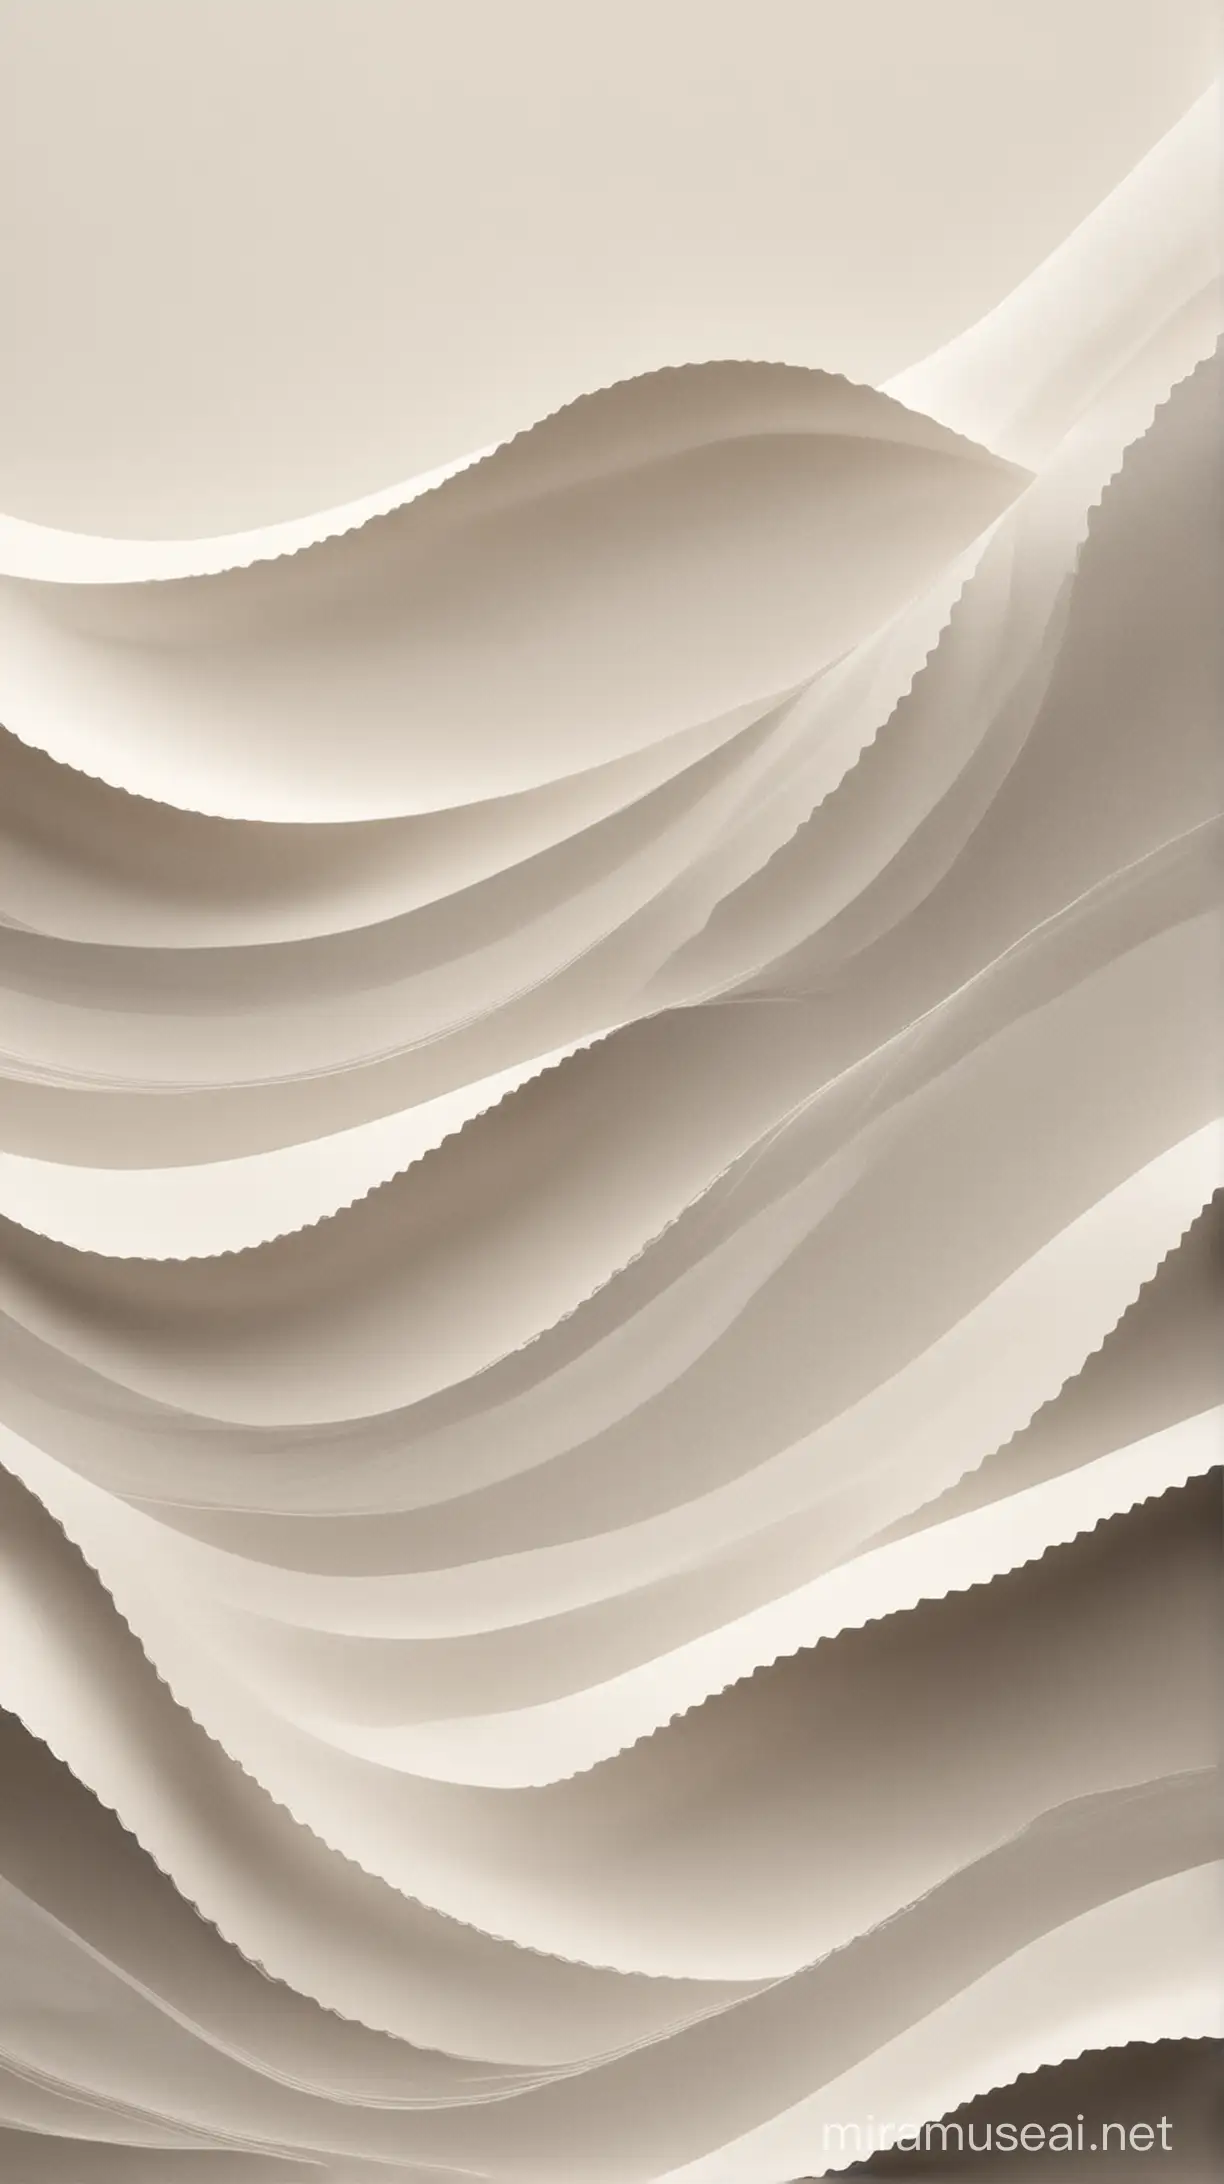 paper waves, minimalist style, dynamic